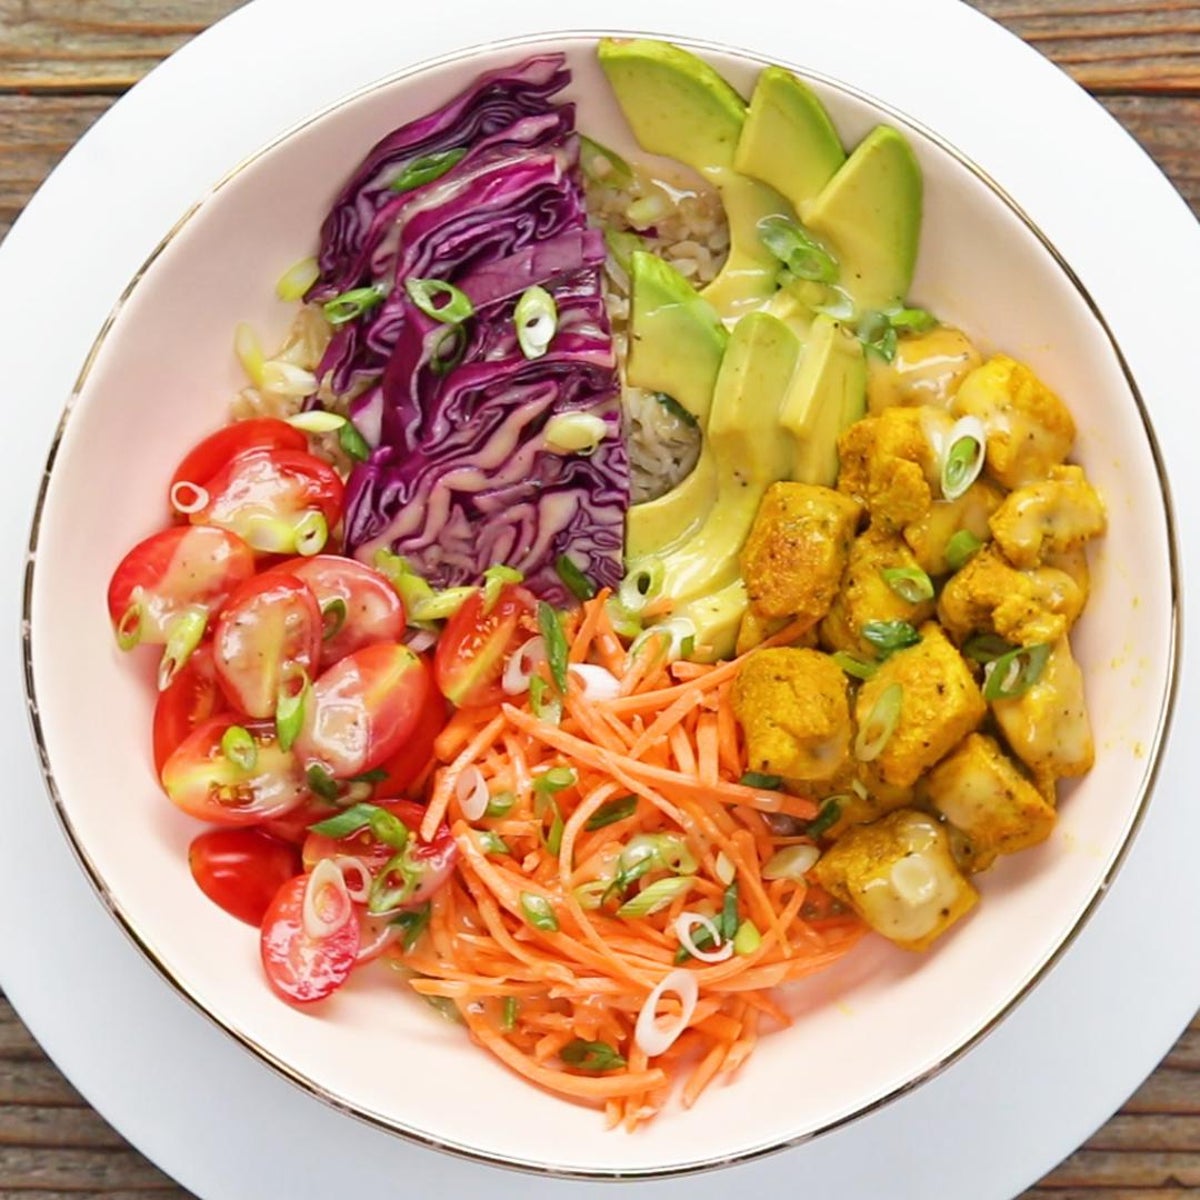 Buddha Bowl Super Salad with a Choice of Three Dressings - Vegan